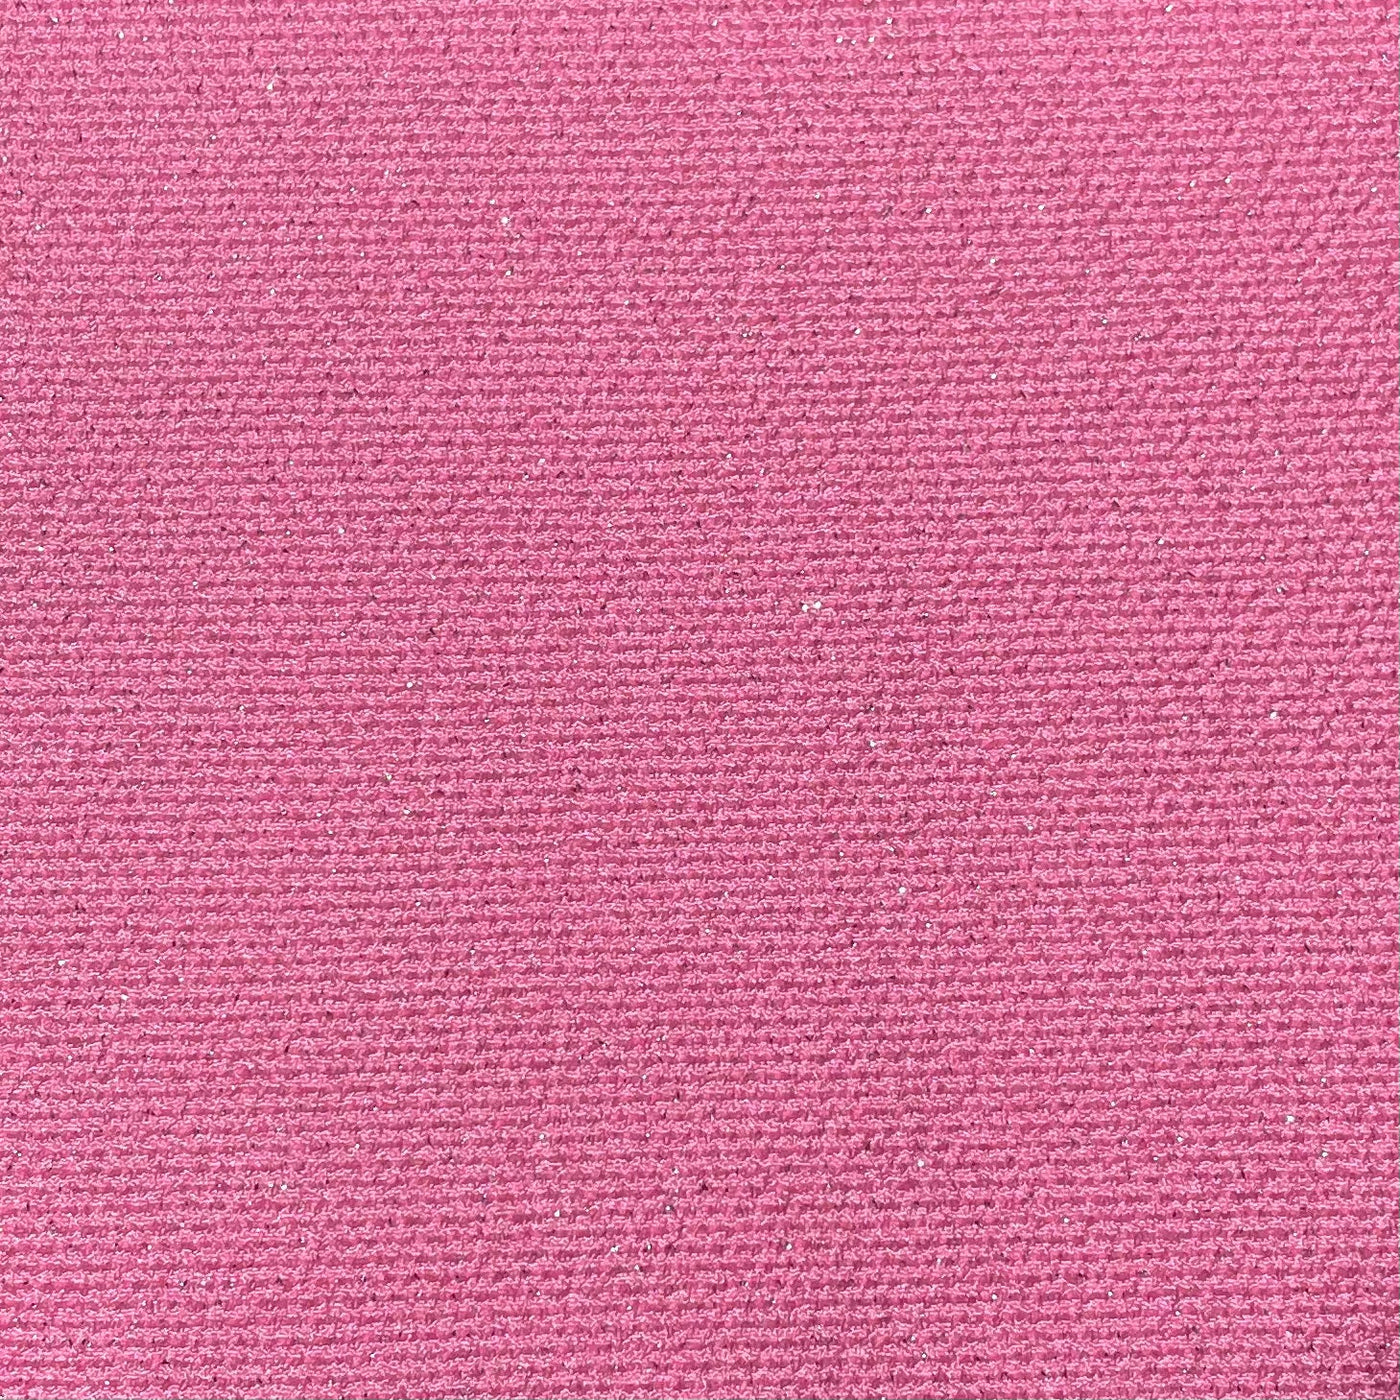 Bottom Pucusana pink bright